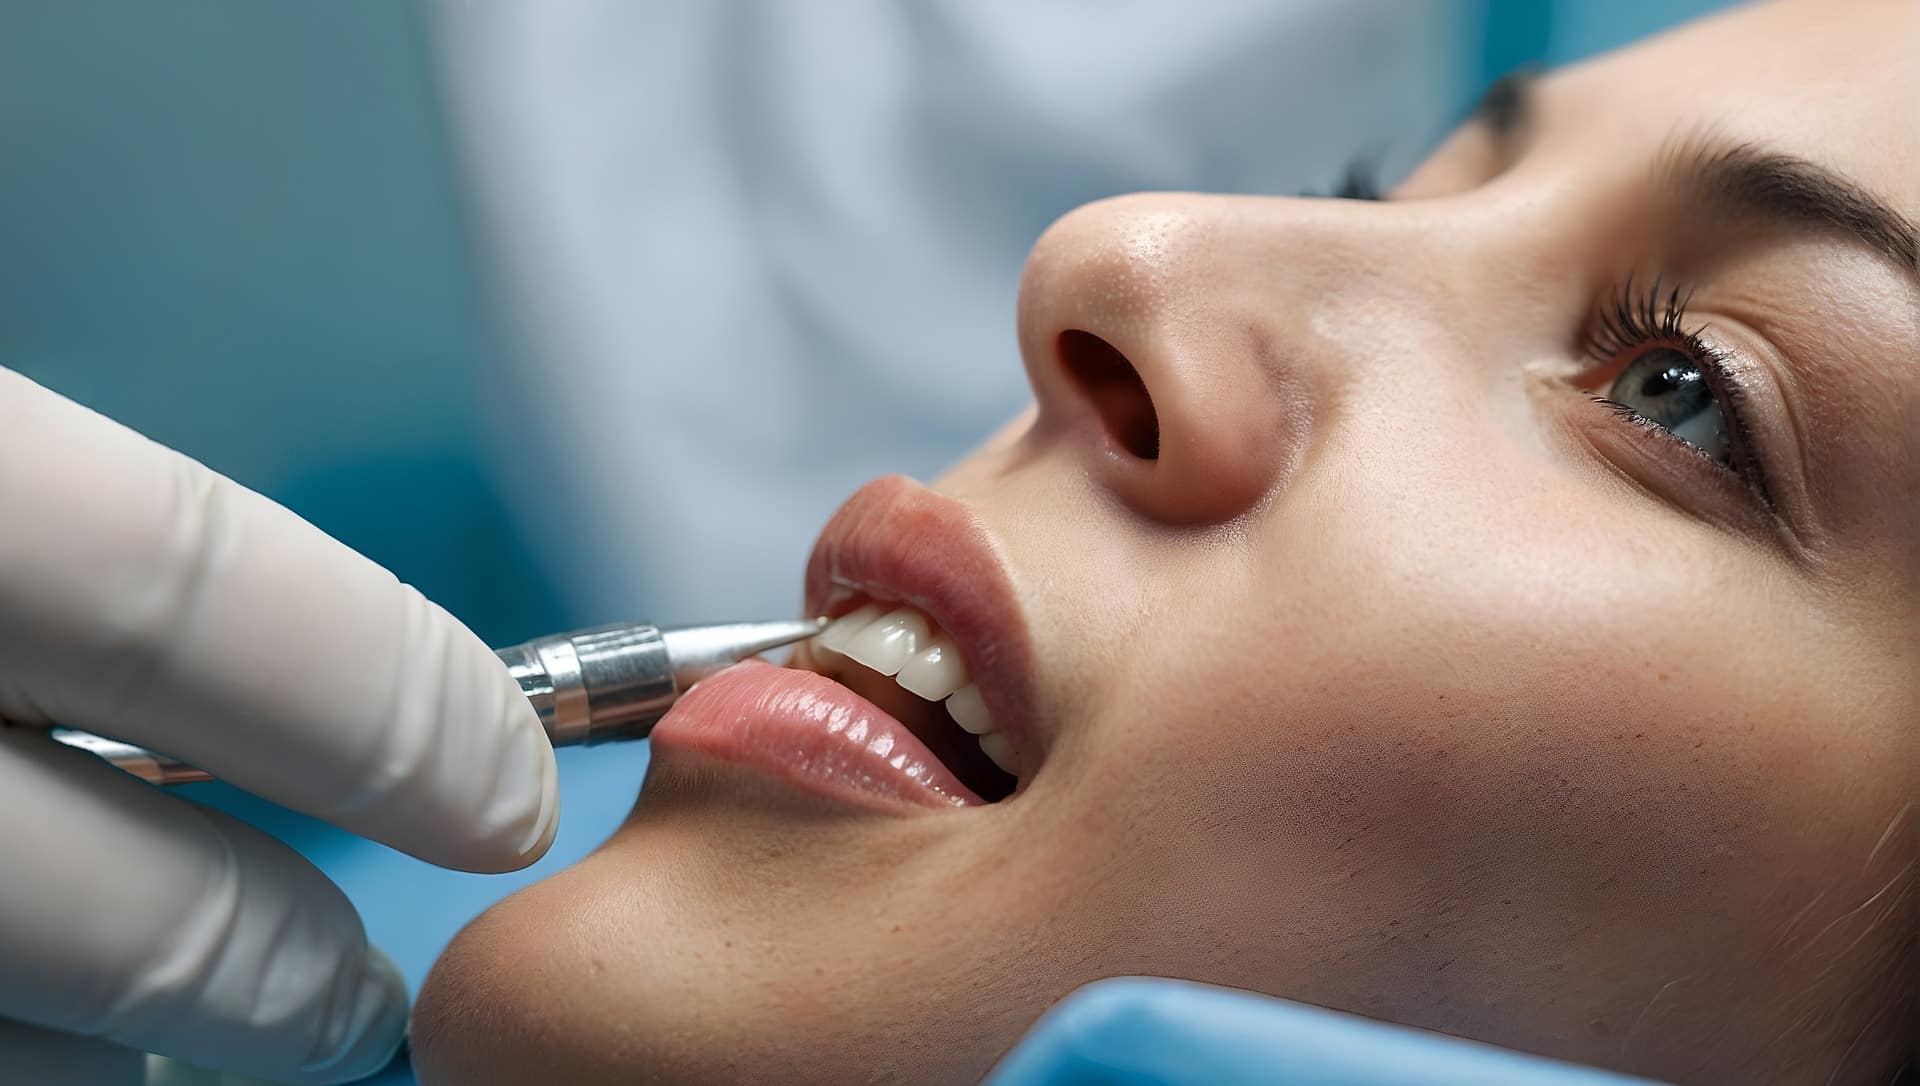 The world’s first drug for dental regeneration begins clinical trials in September